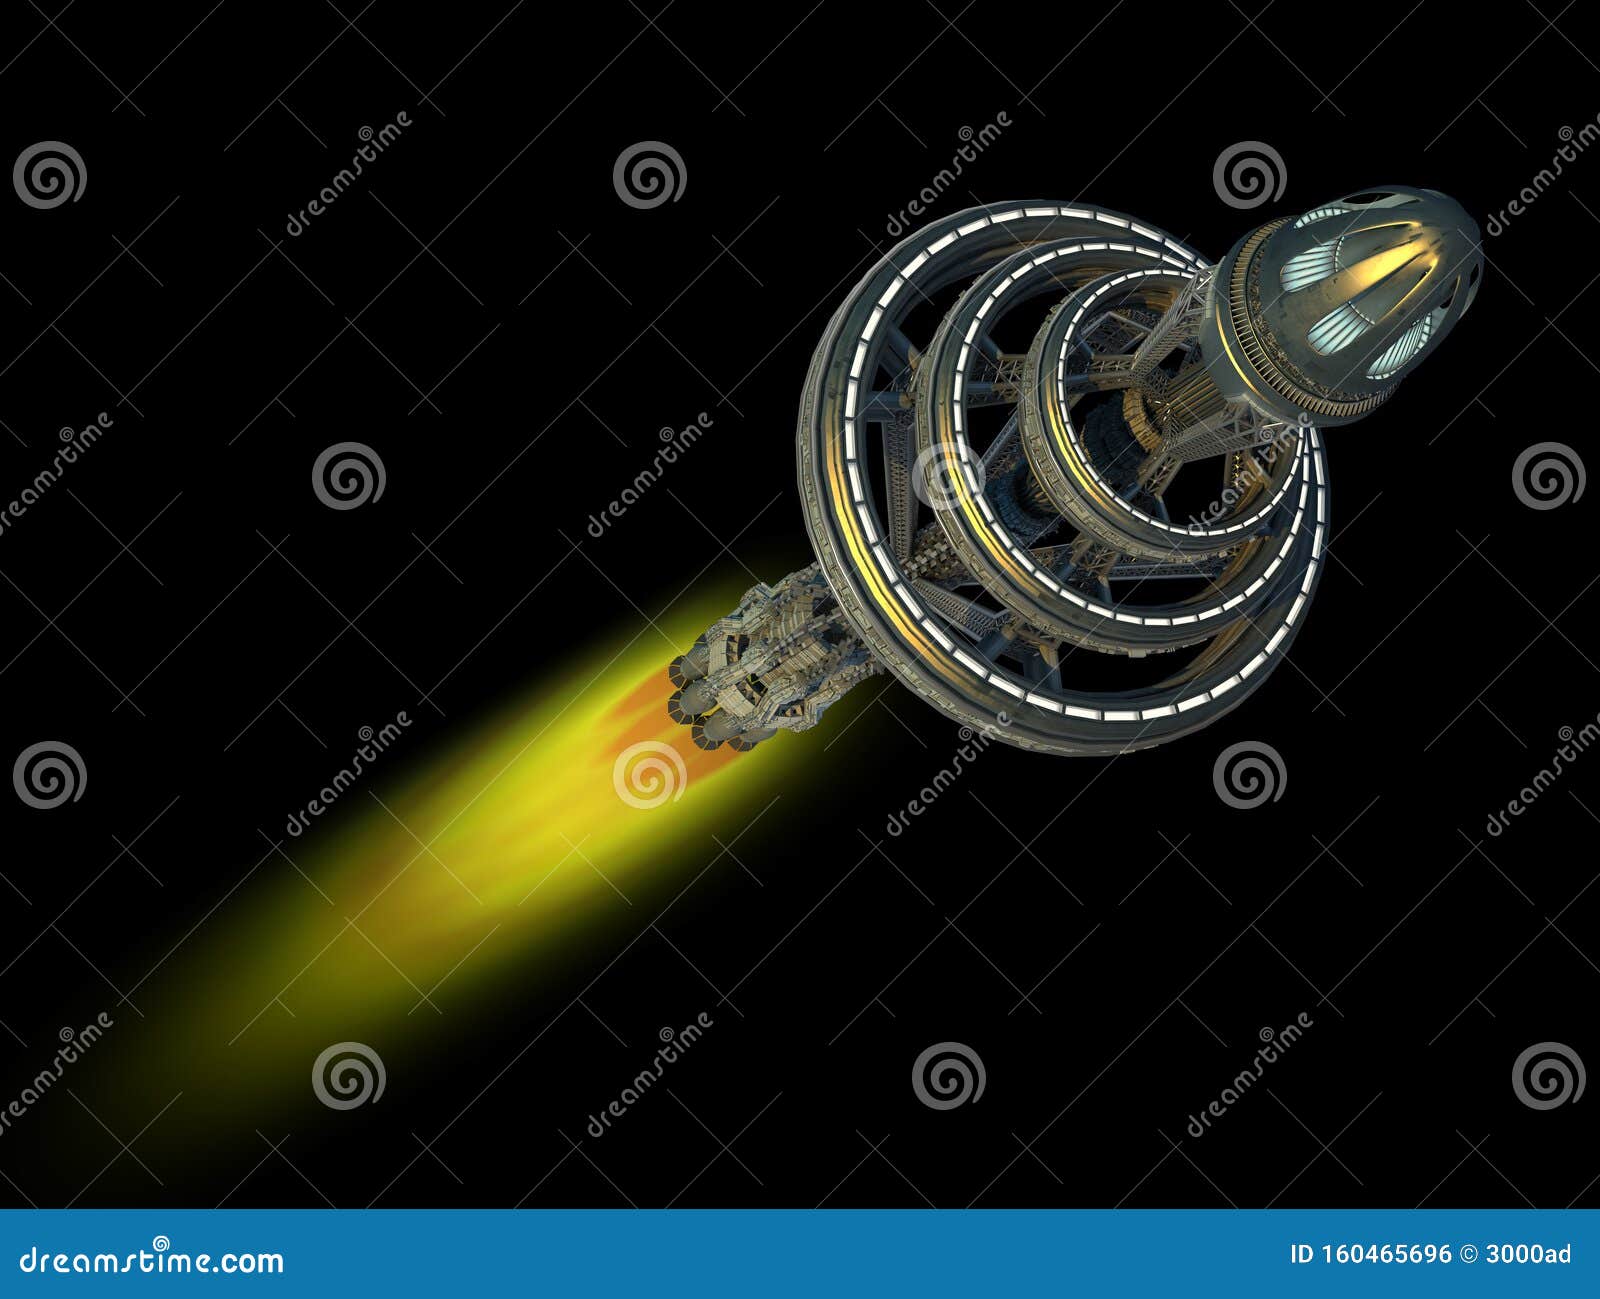 detailed interstellar spaceship with afterburner  on black